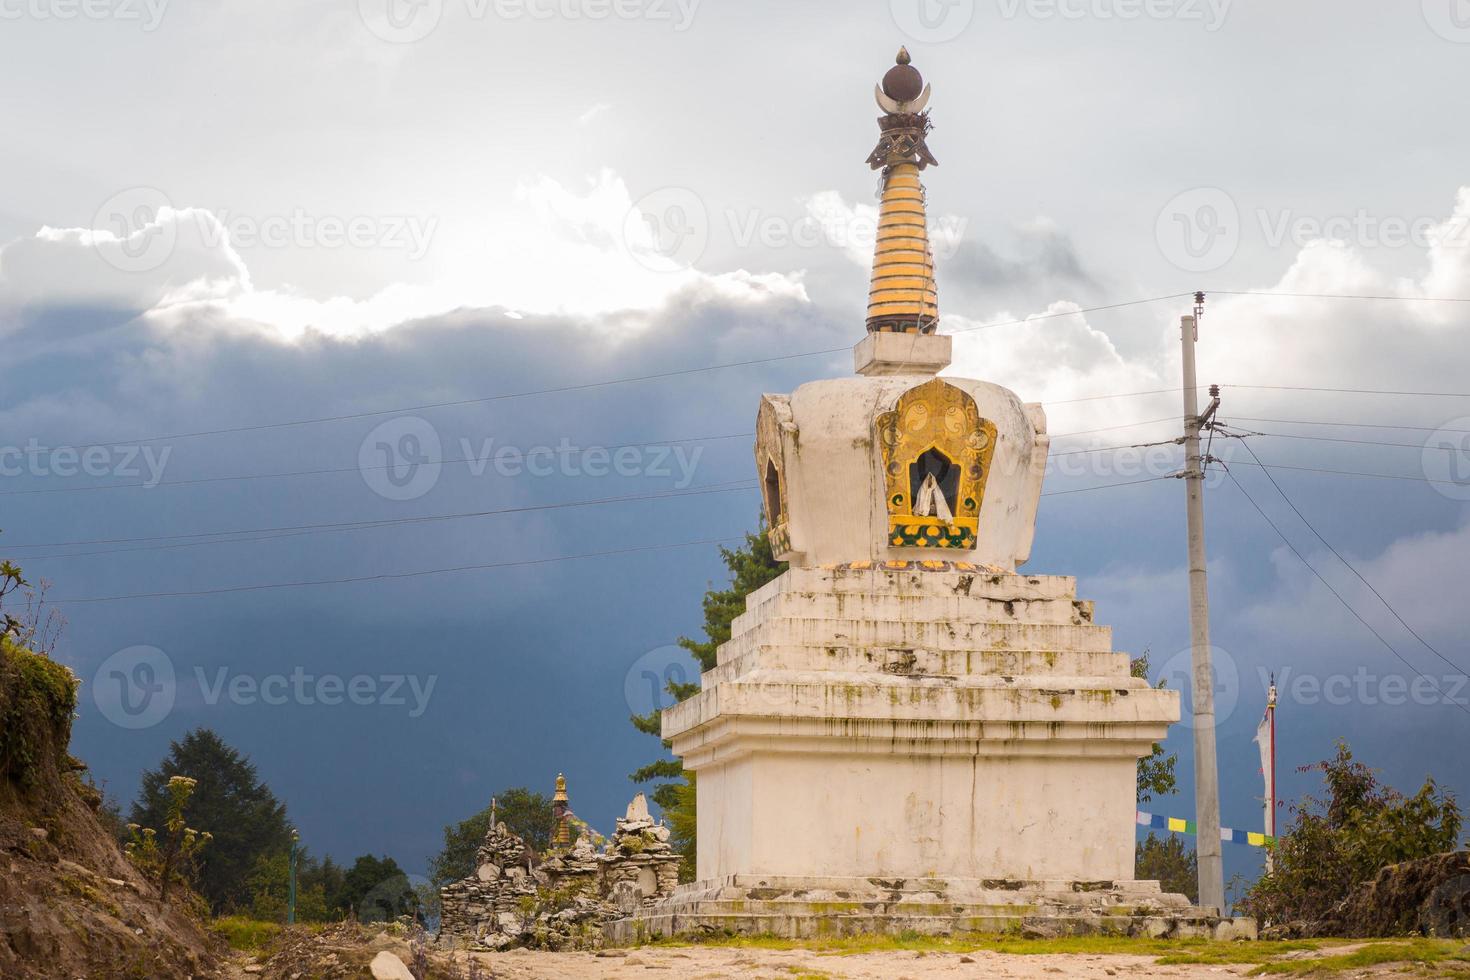 stupa edificio sacro religioso buddista tibetano rovine storiche, Nepal. foto